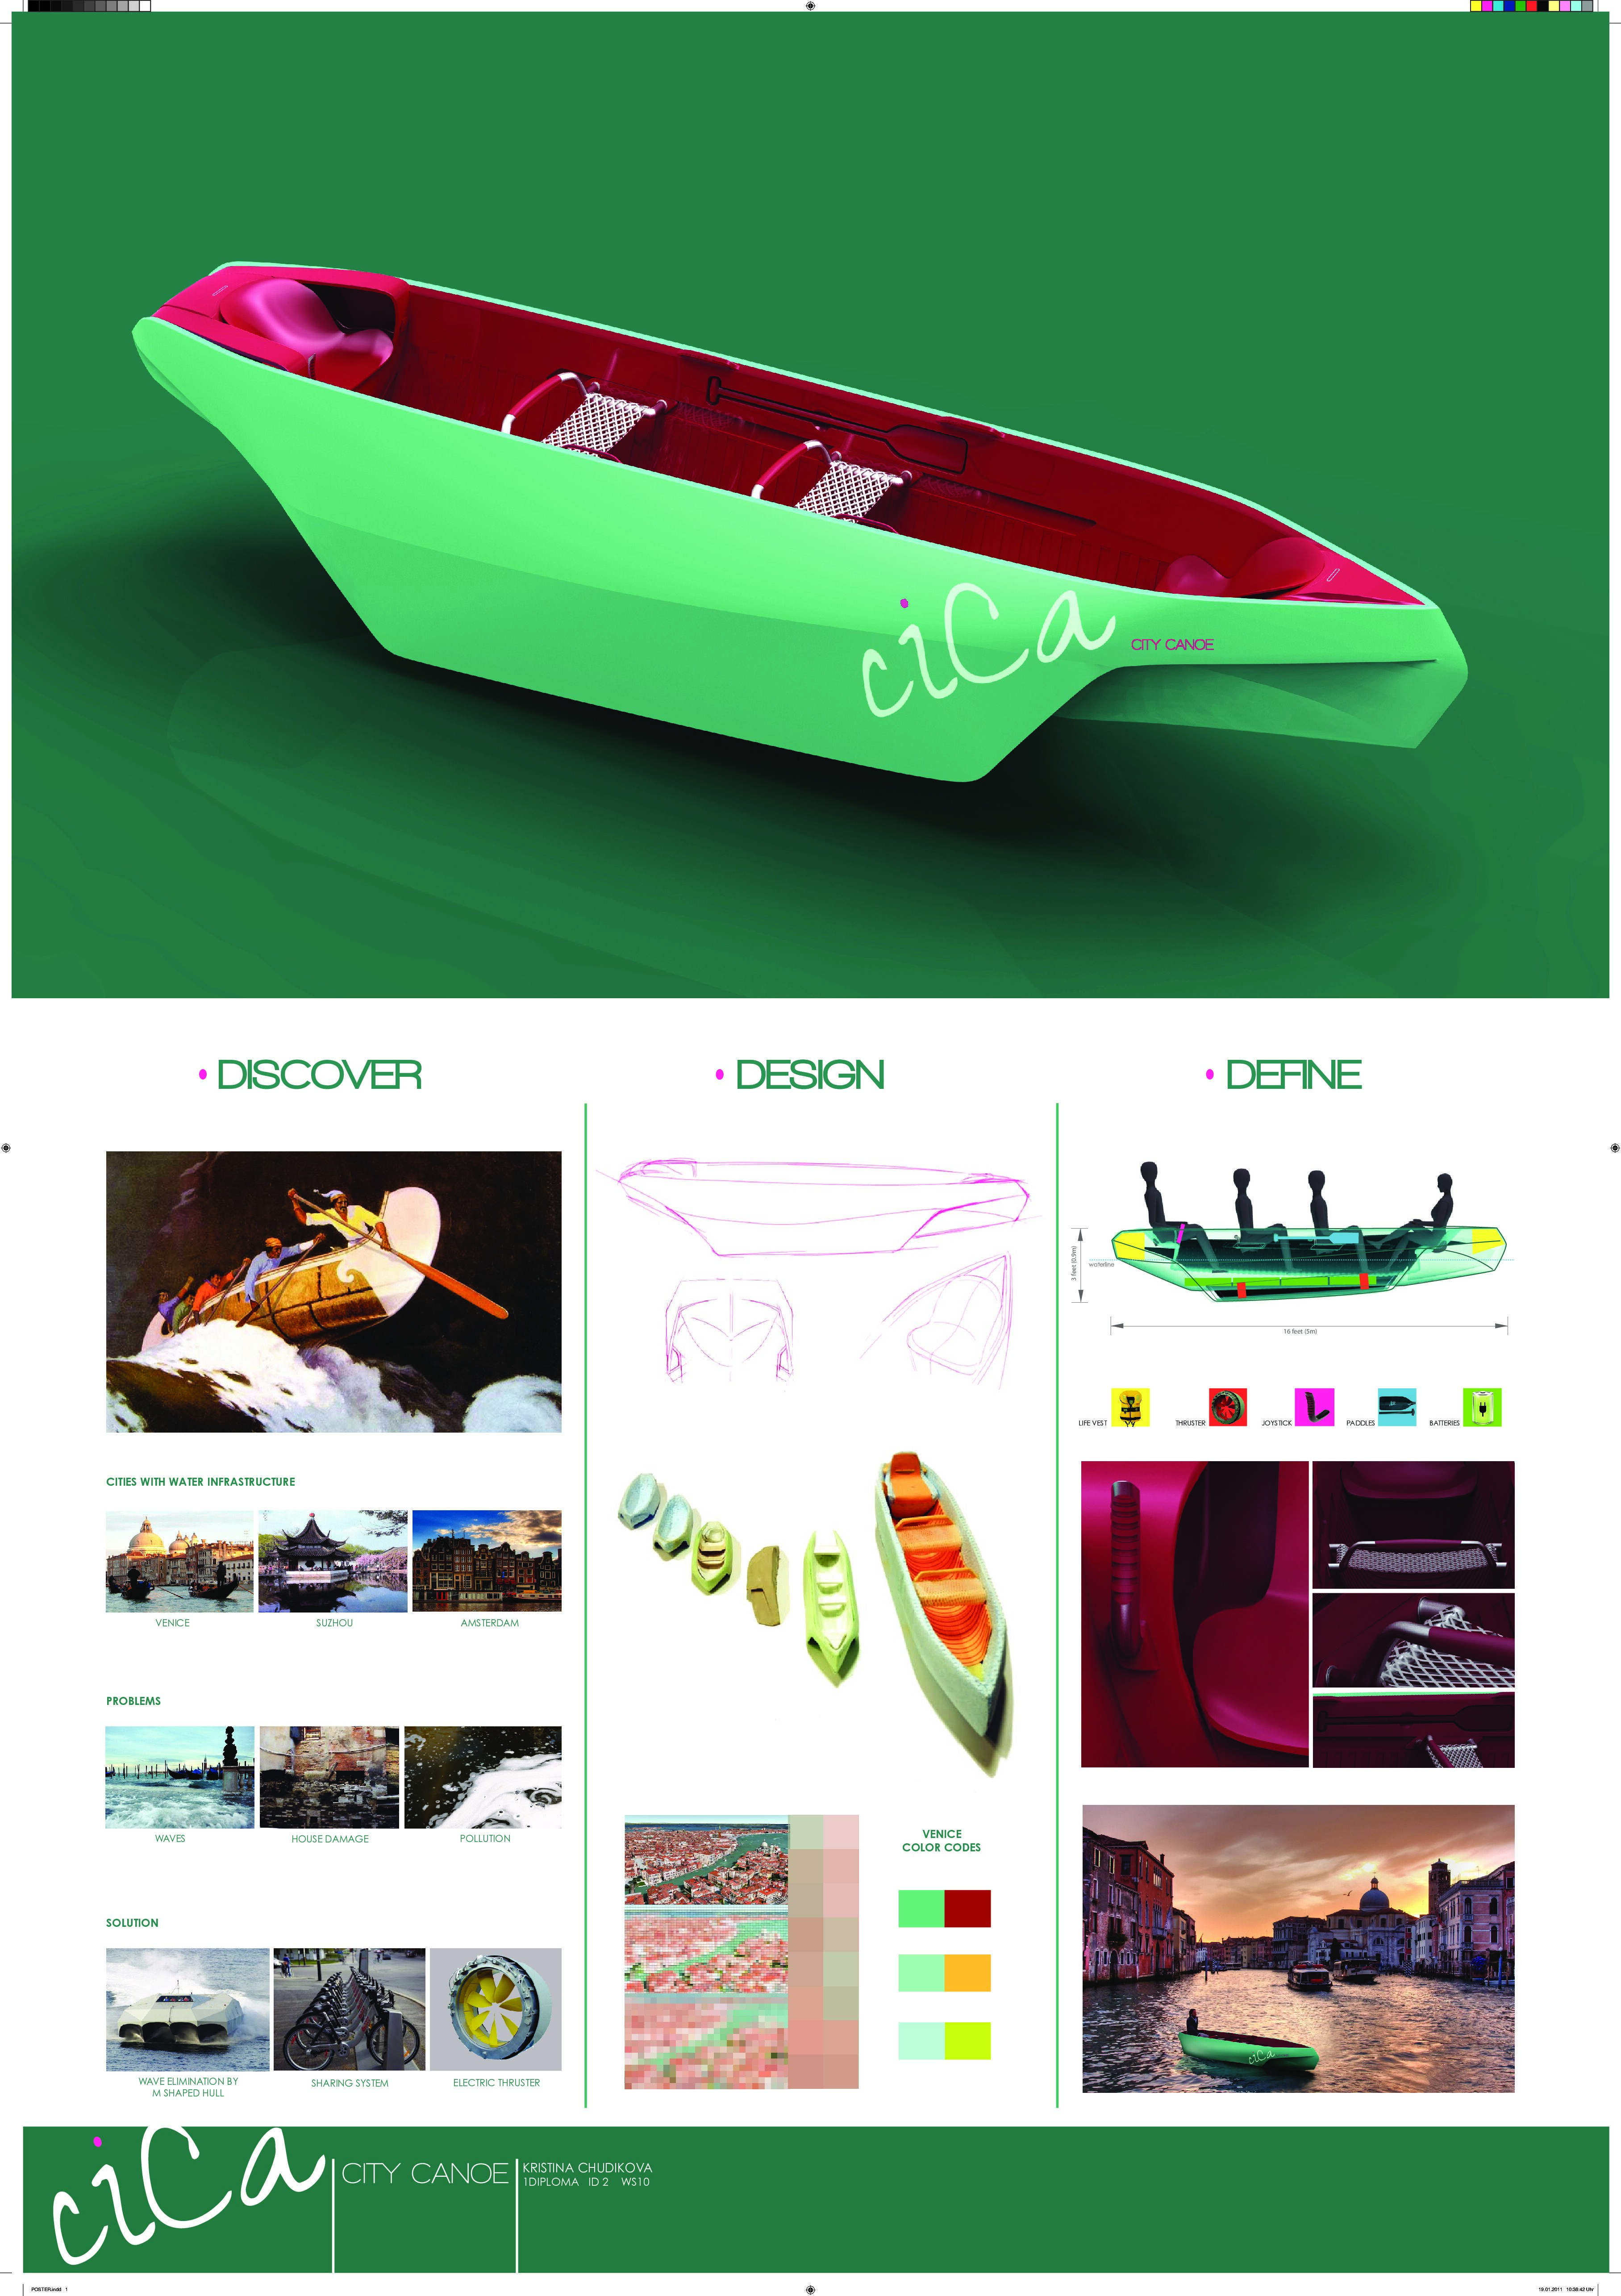 ciCA - City Canoe